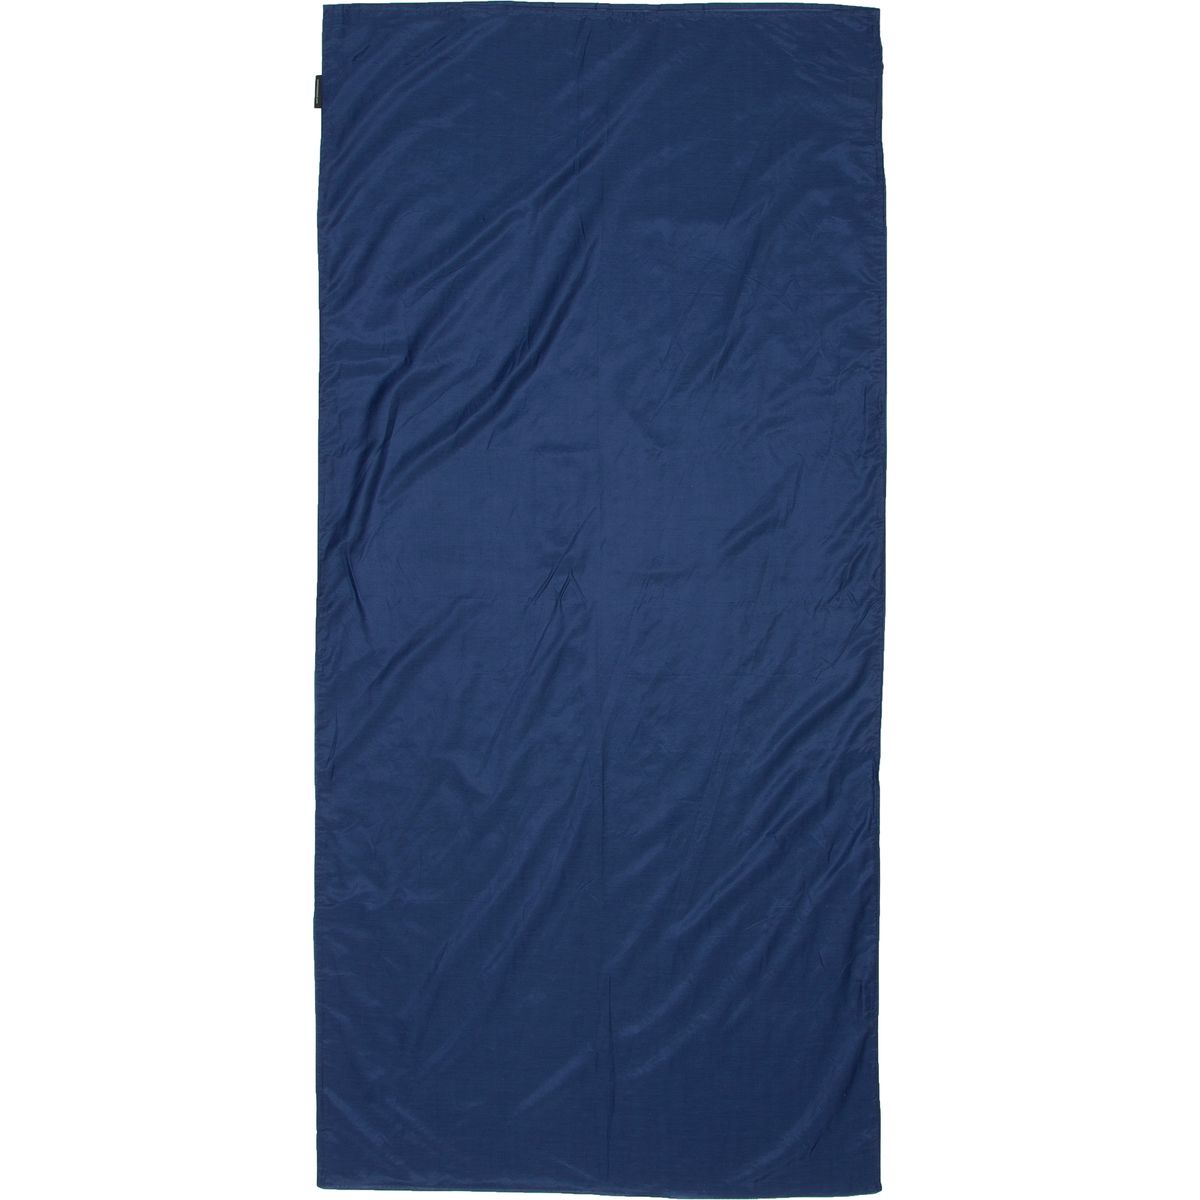 Подкладка для спального мешка из смеси шелка и хлопка премиум-класса Sea To Summit Sea to Summit